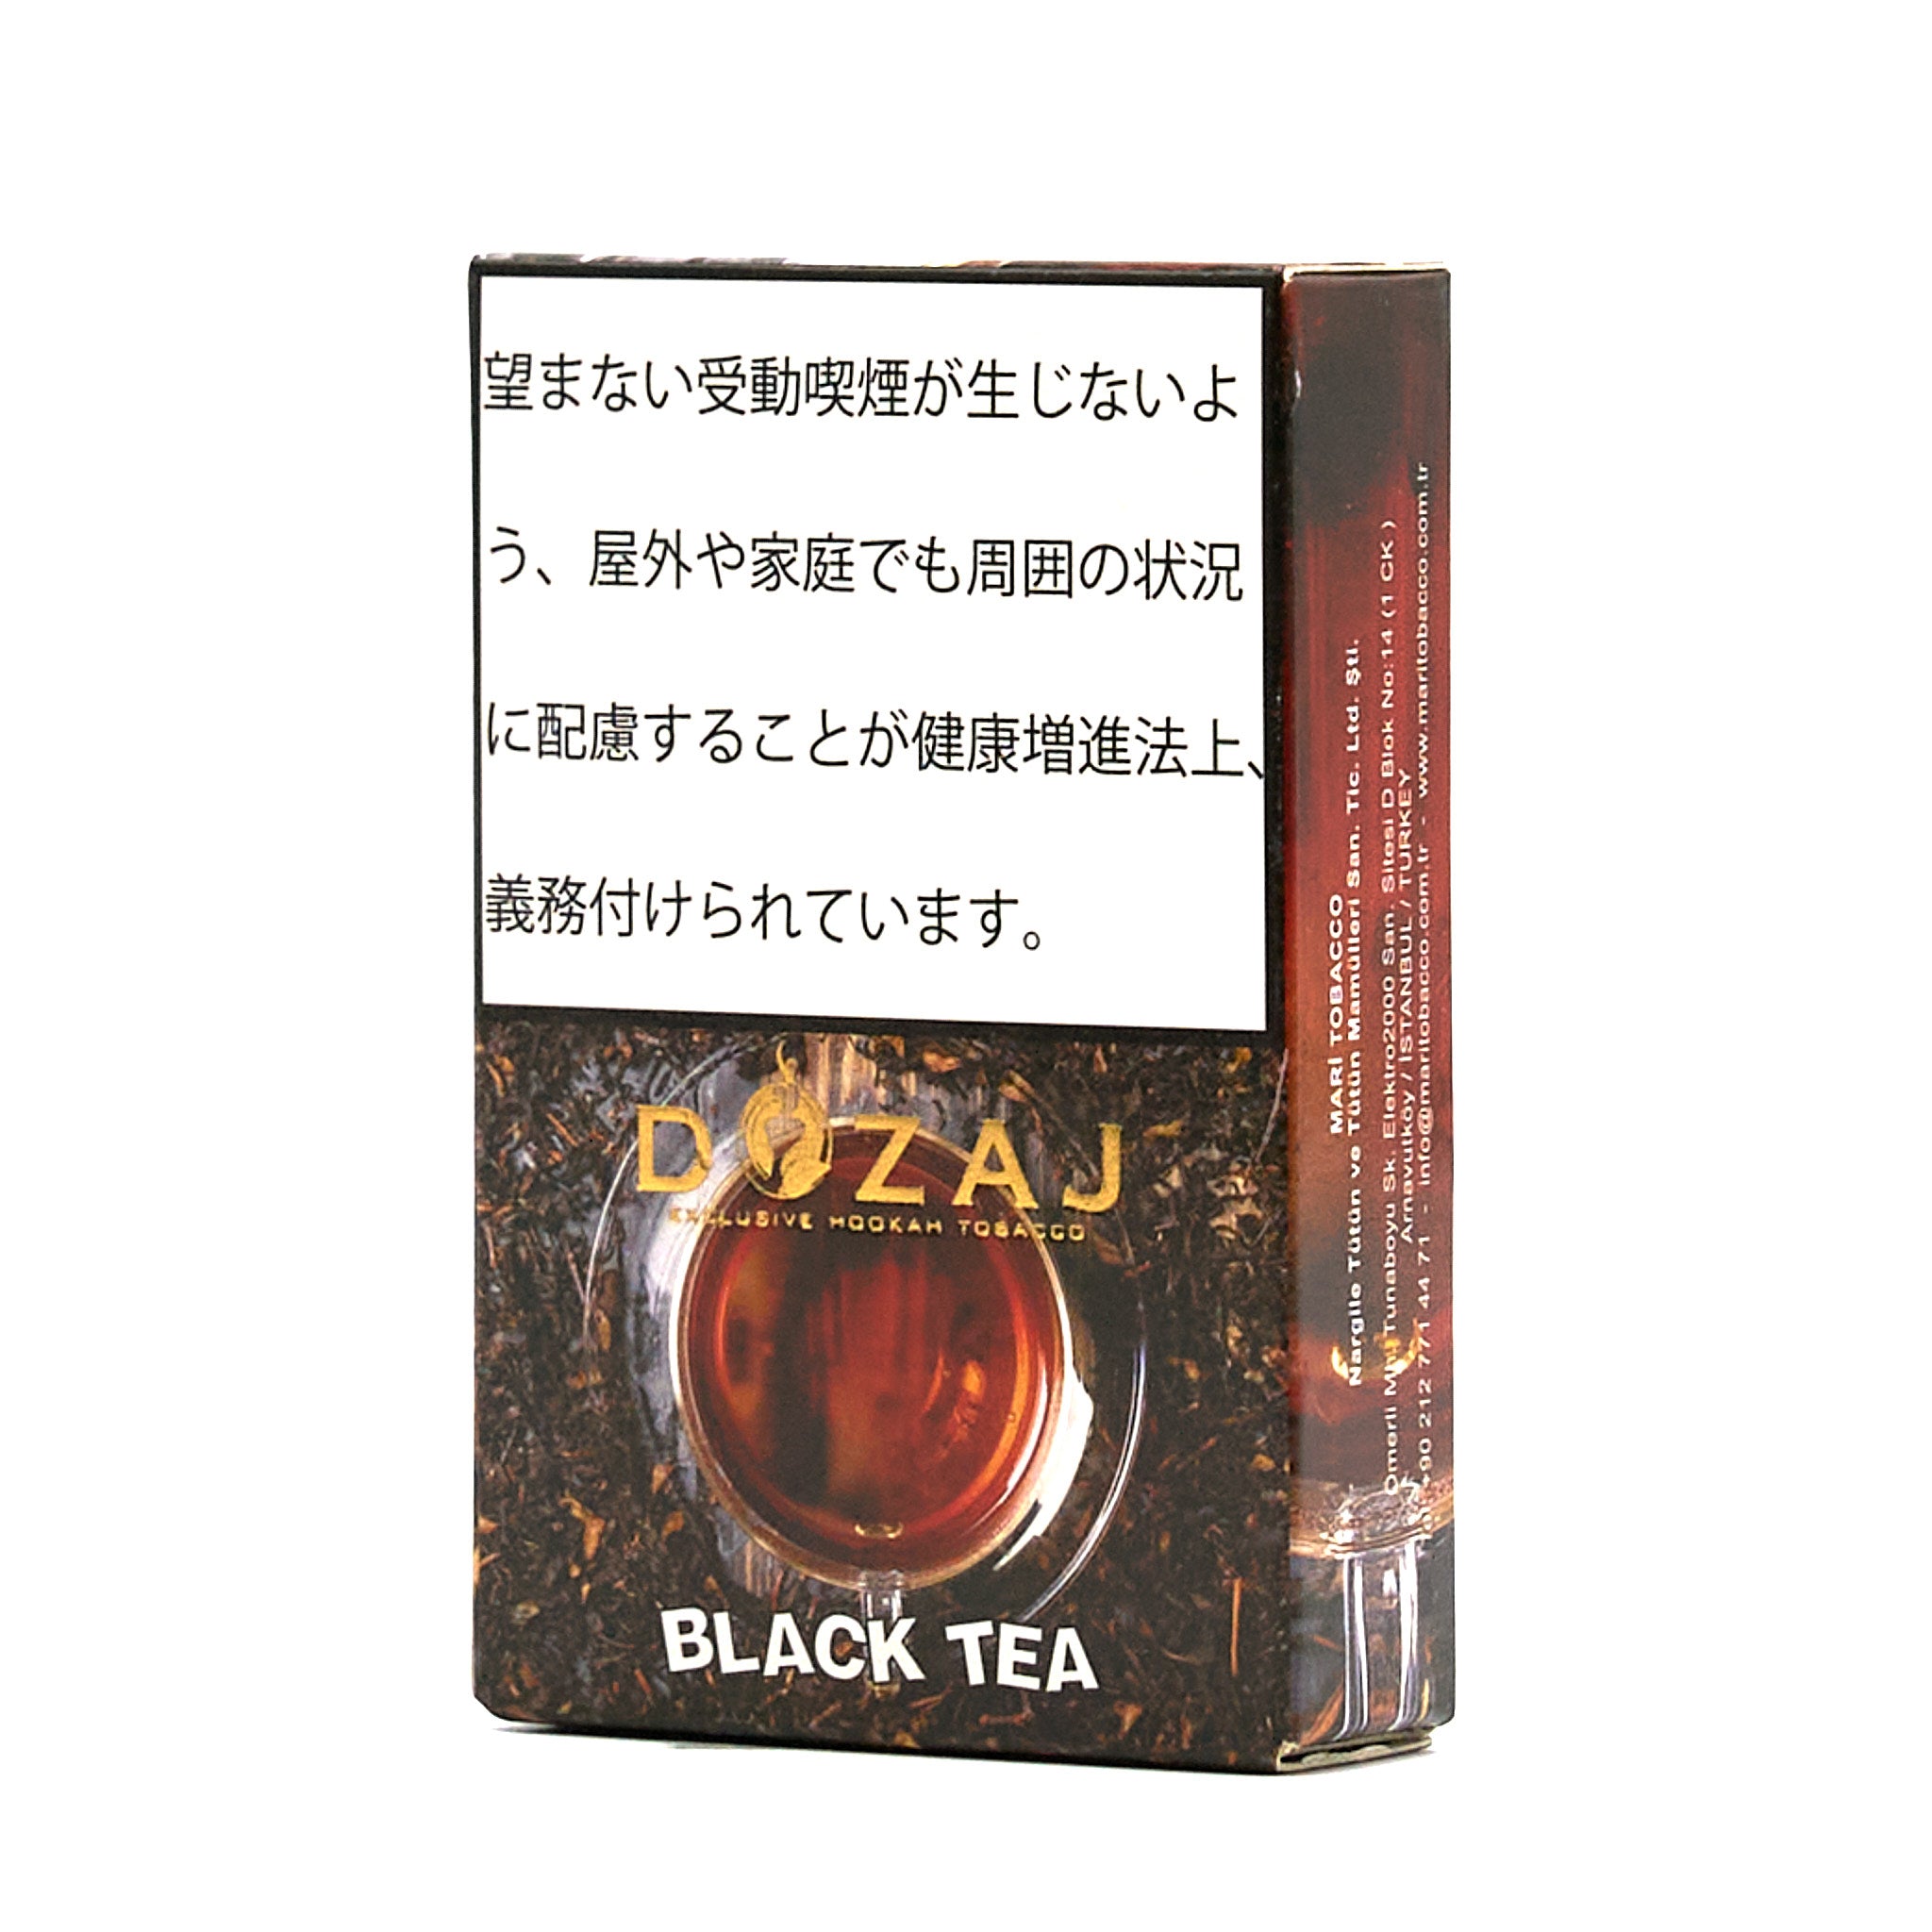 Black tea / ブラックティー (50g)